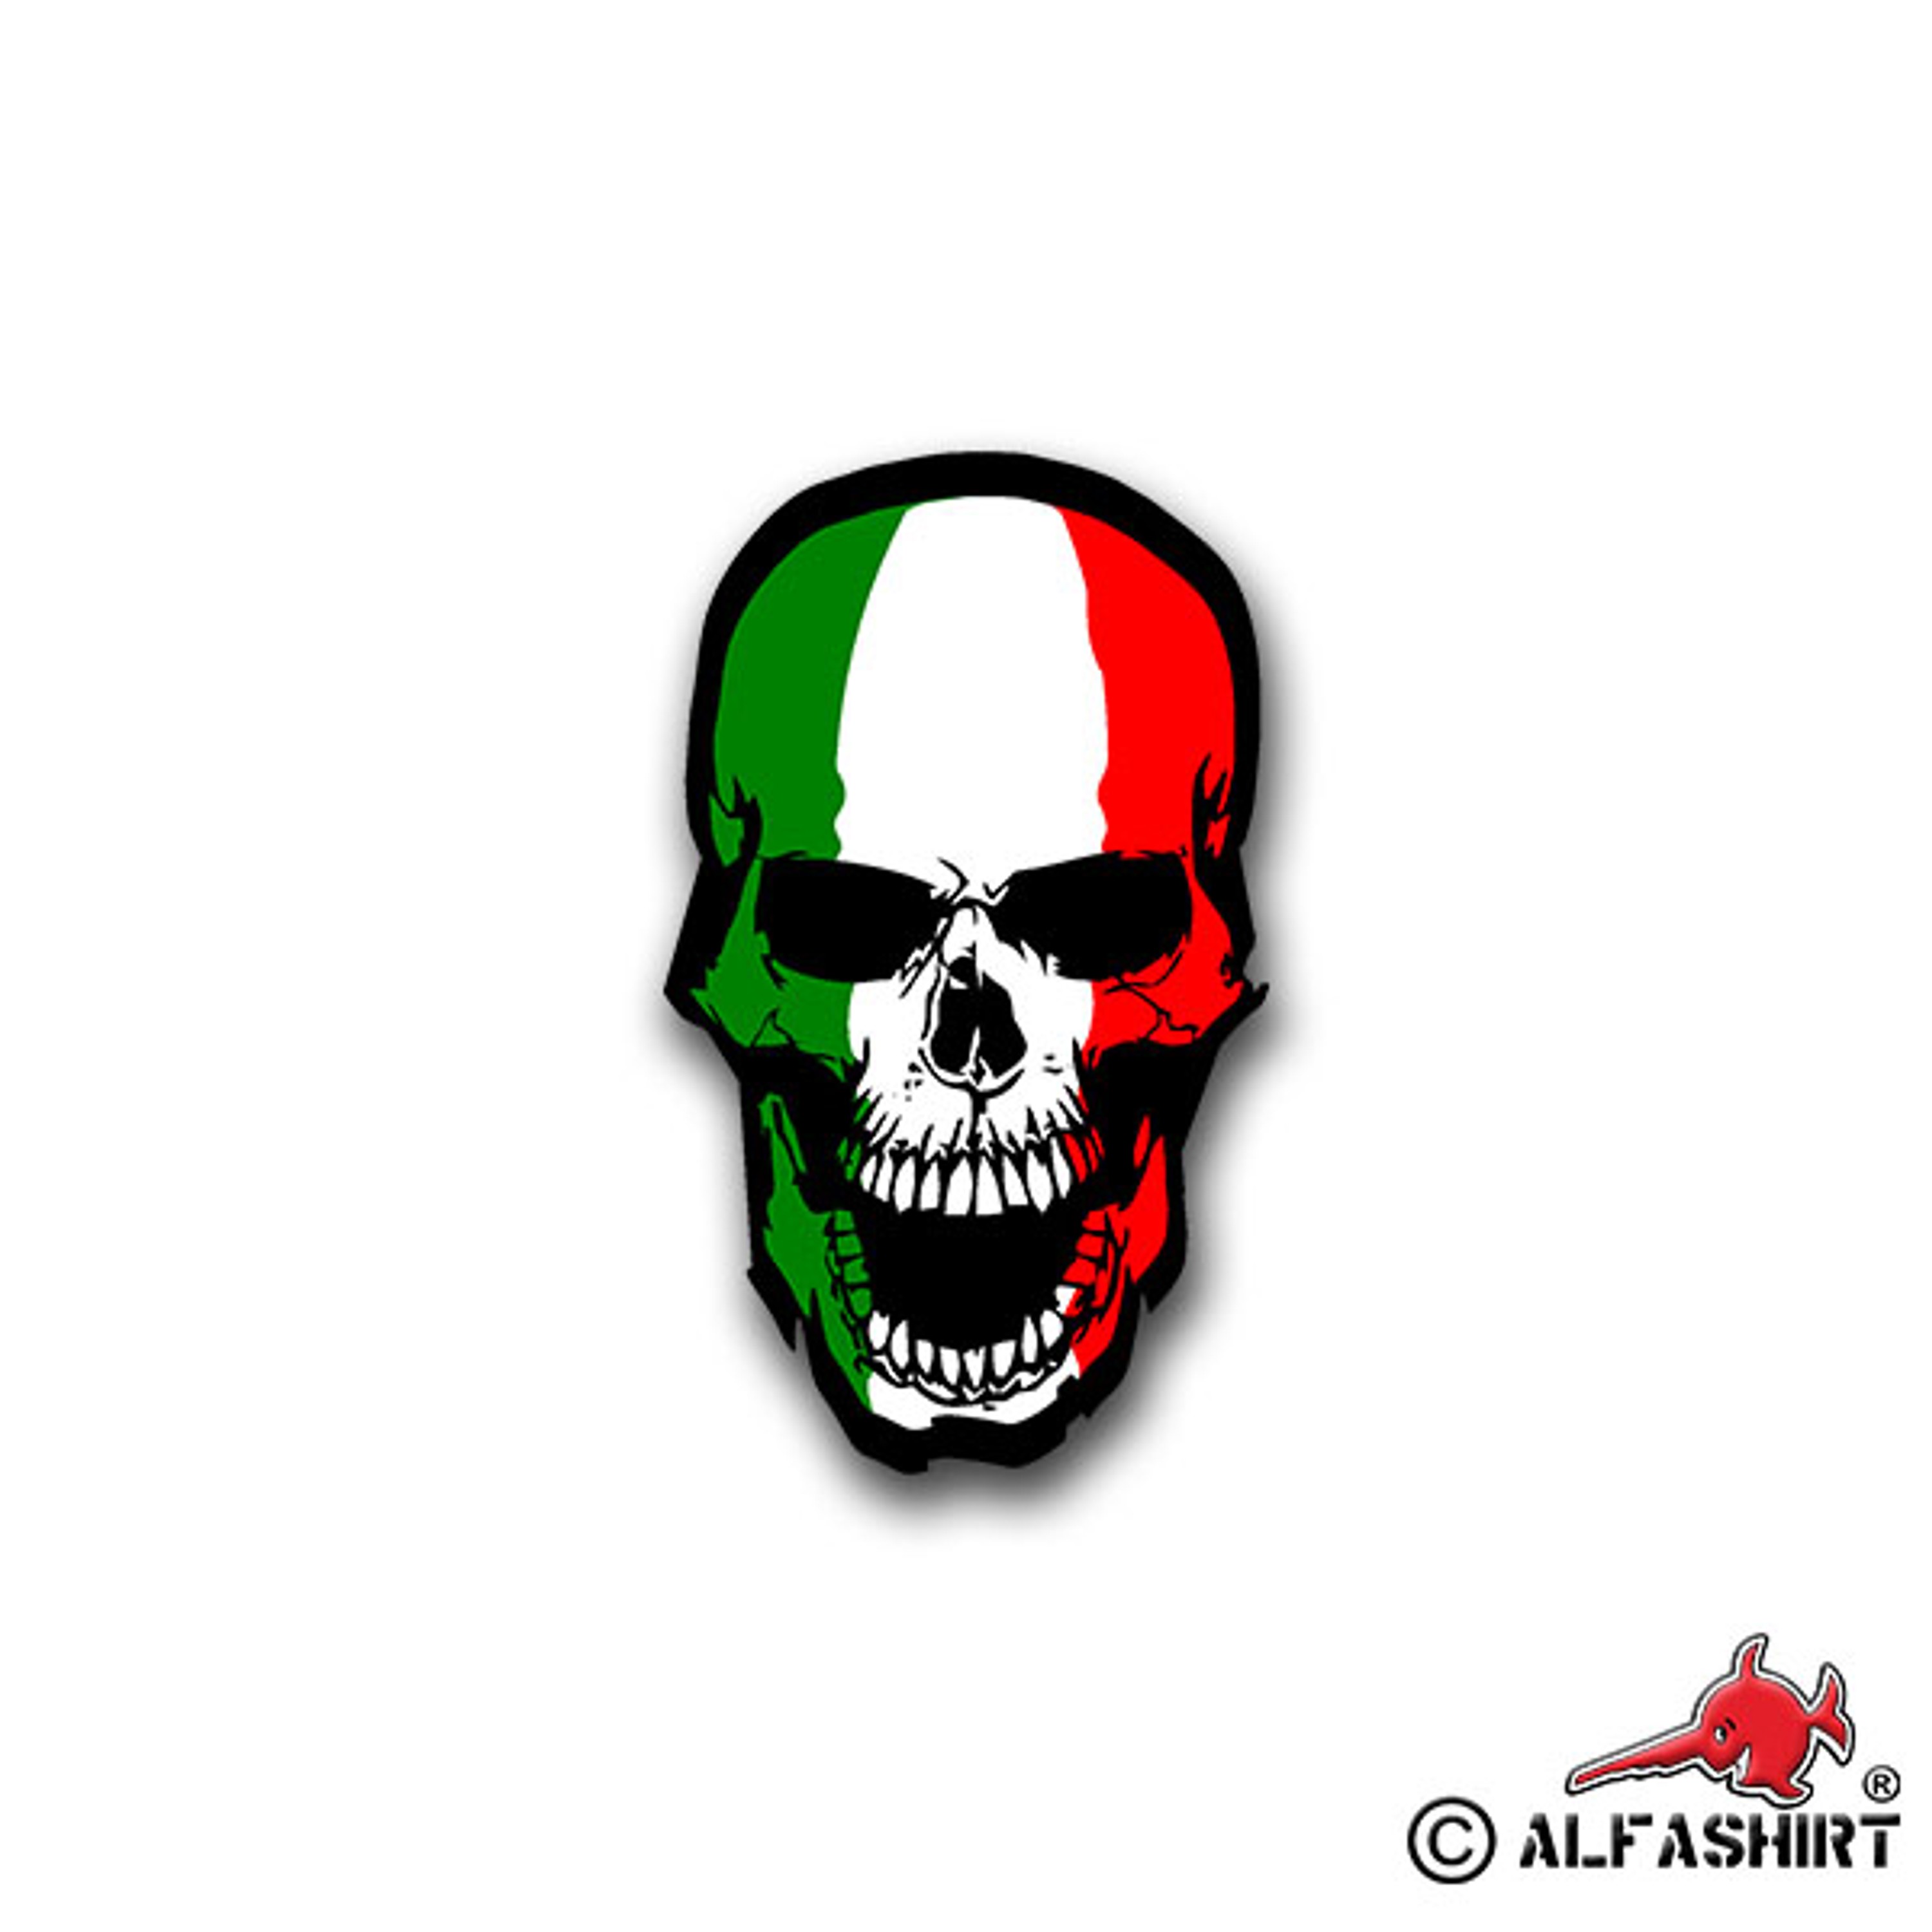 Aufkleber/Sticker Skull Italien Knochen Totenkopf Südeuropa Rom 7x4cm A1480